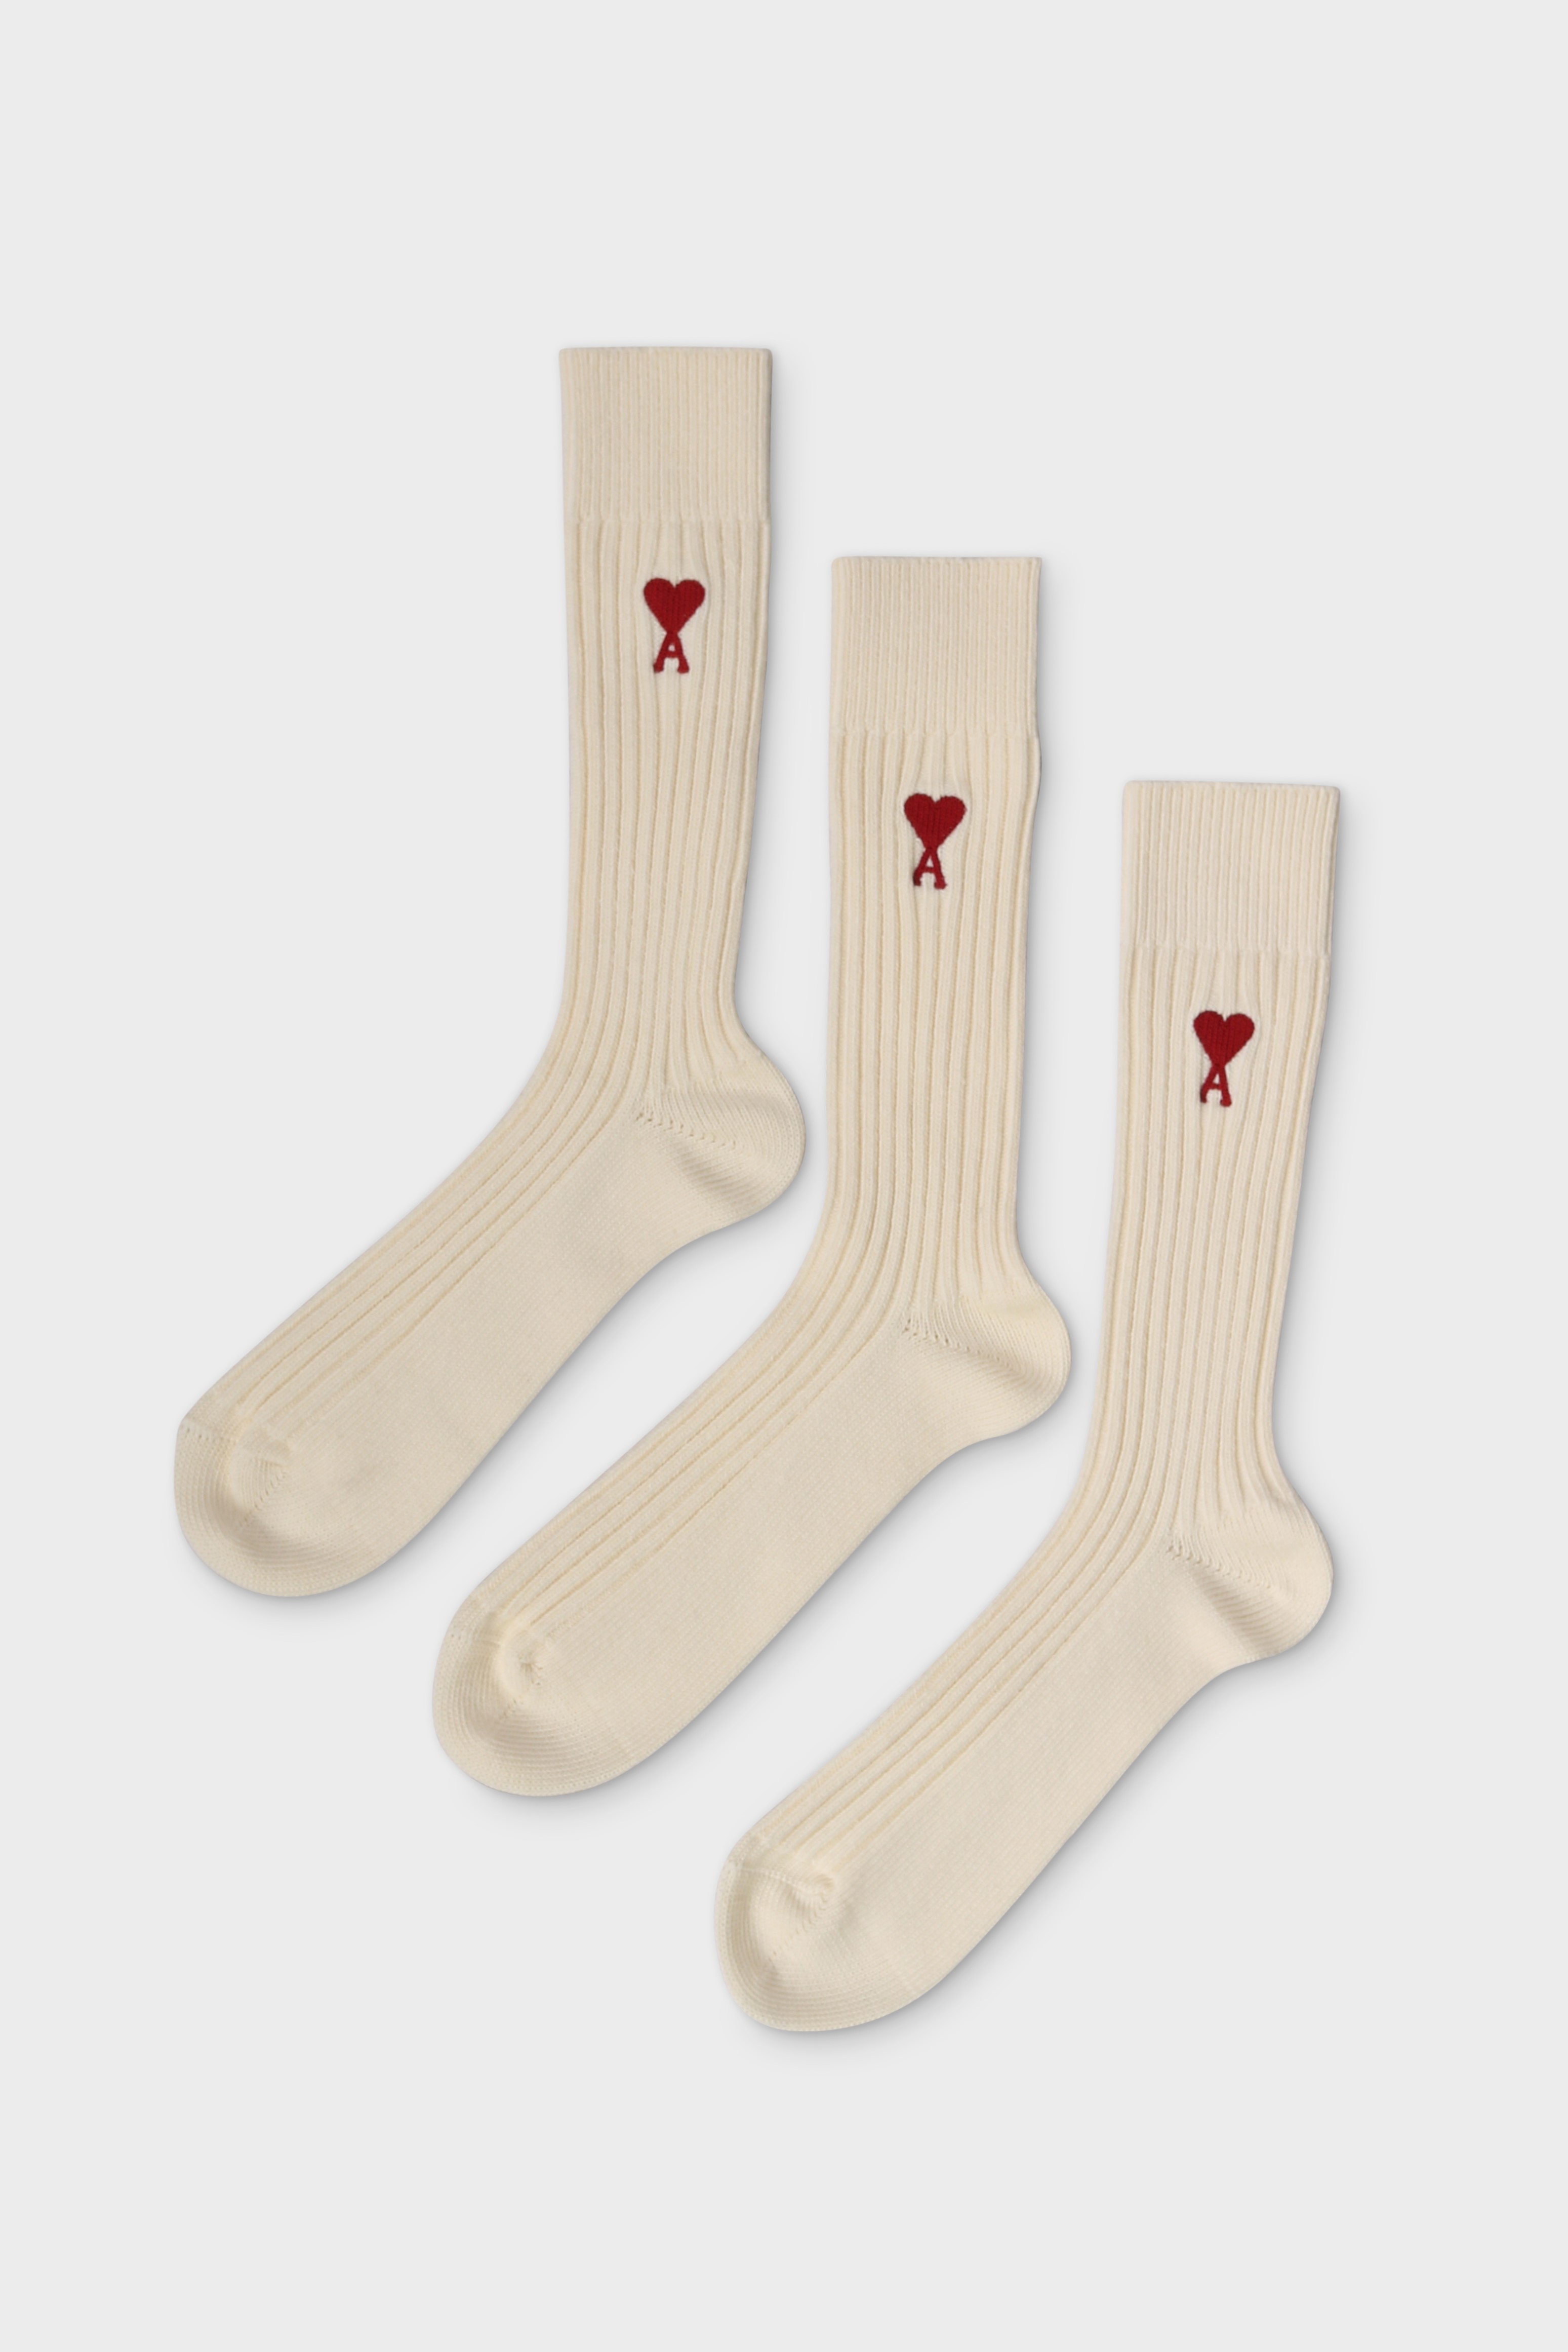 AMI PARIS de Coeur 3 Pack Socks in Off White 43-46